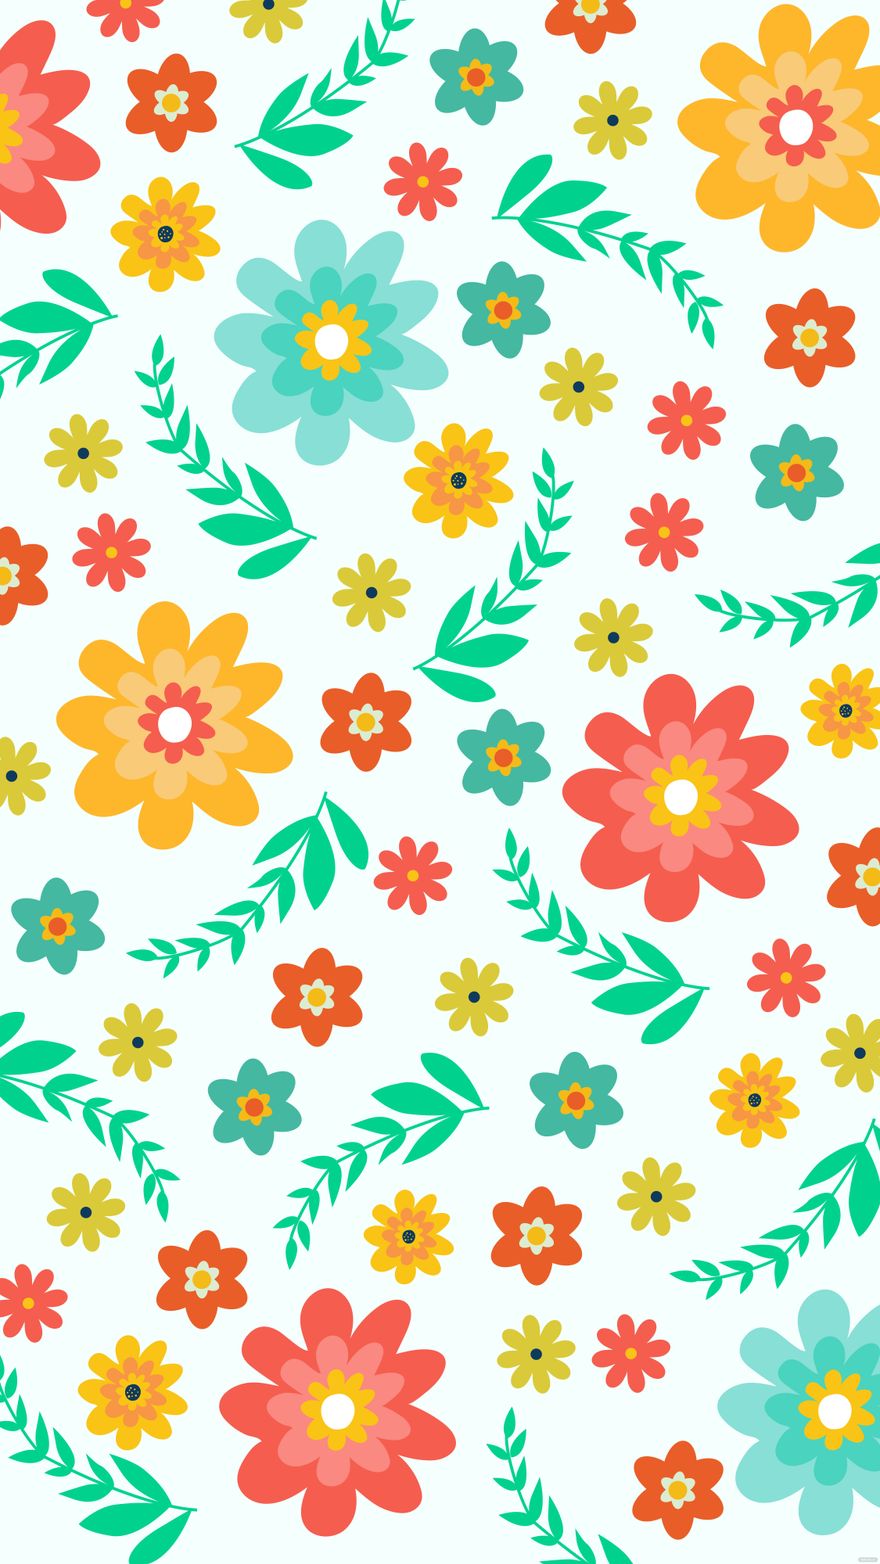 Free Summer Floral Seamless Background - EPS, Illustrator, JPG, SVG | Template.net